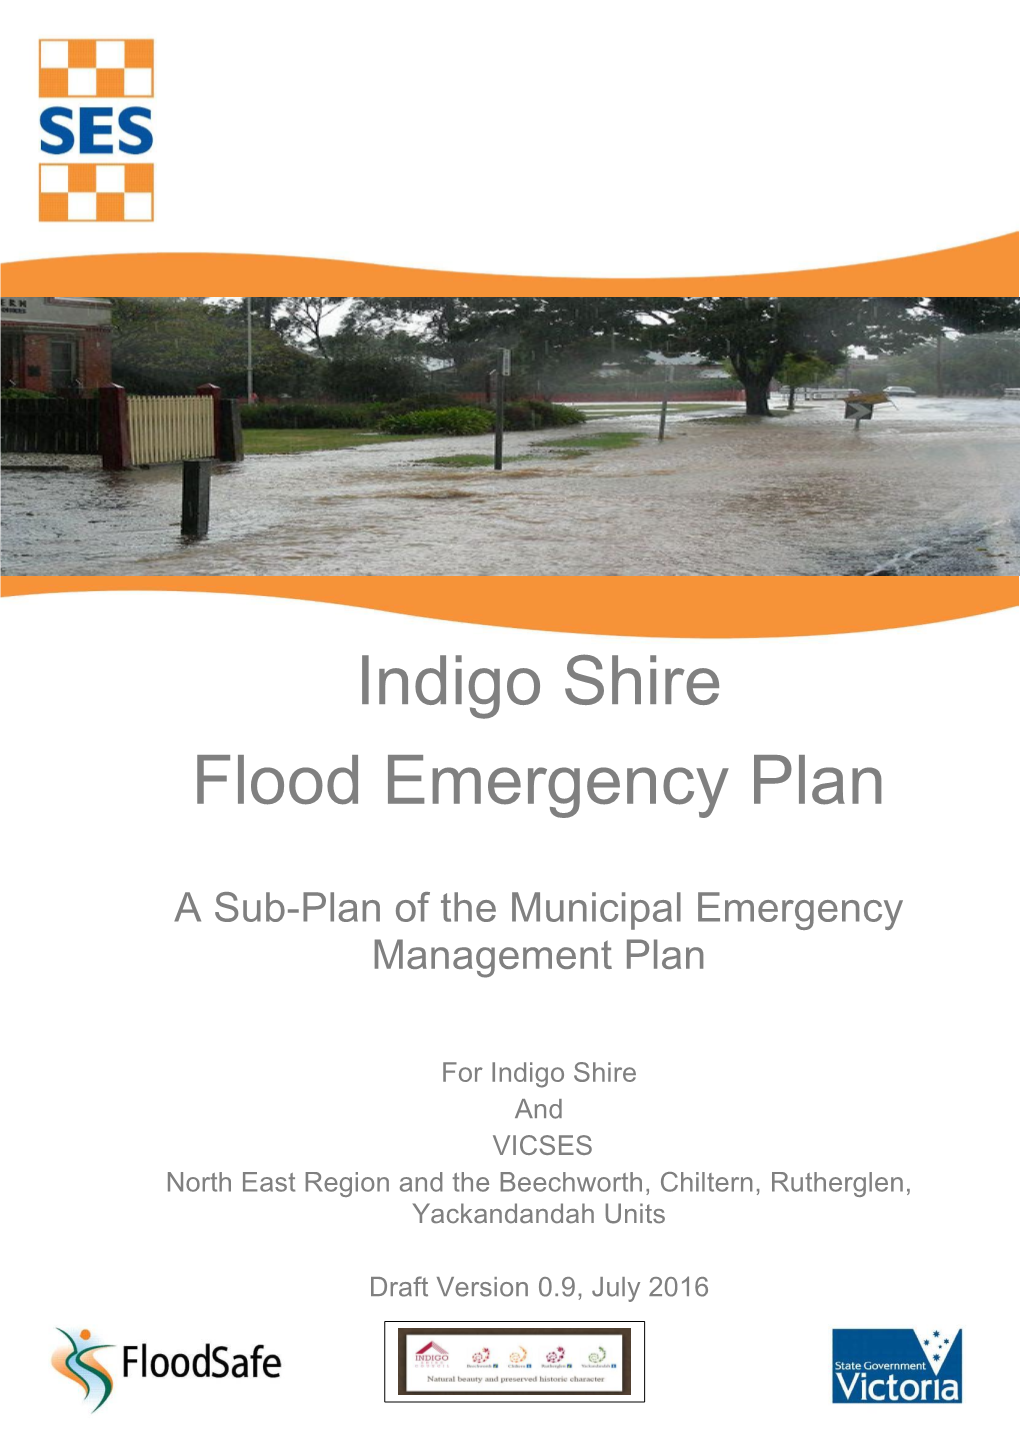 Flood Emergency Plan